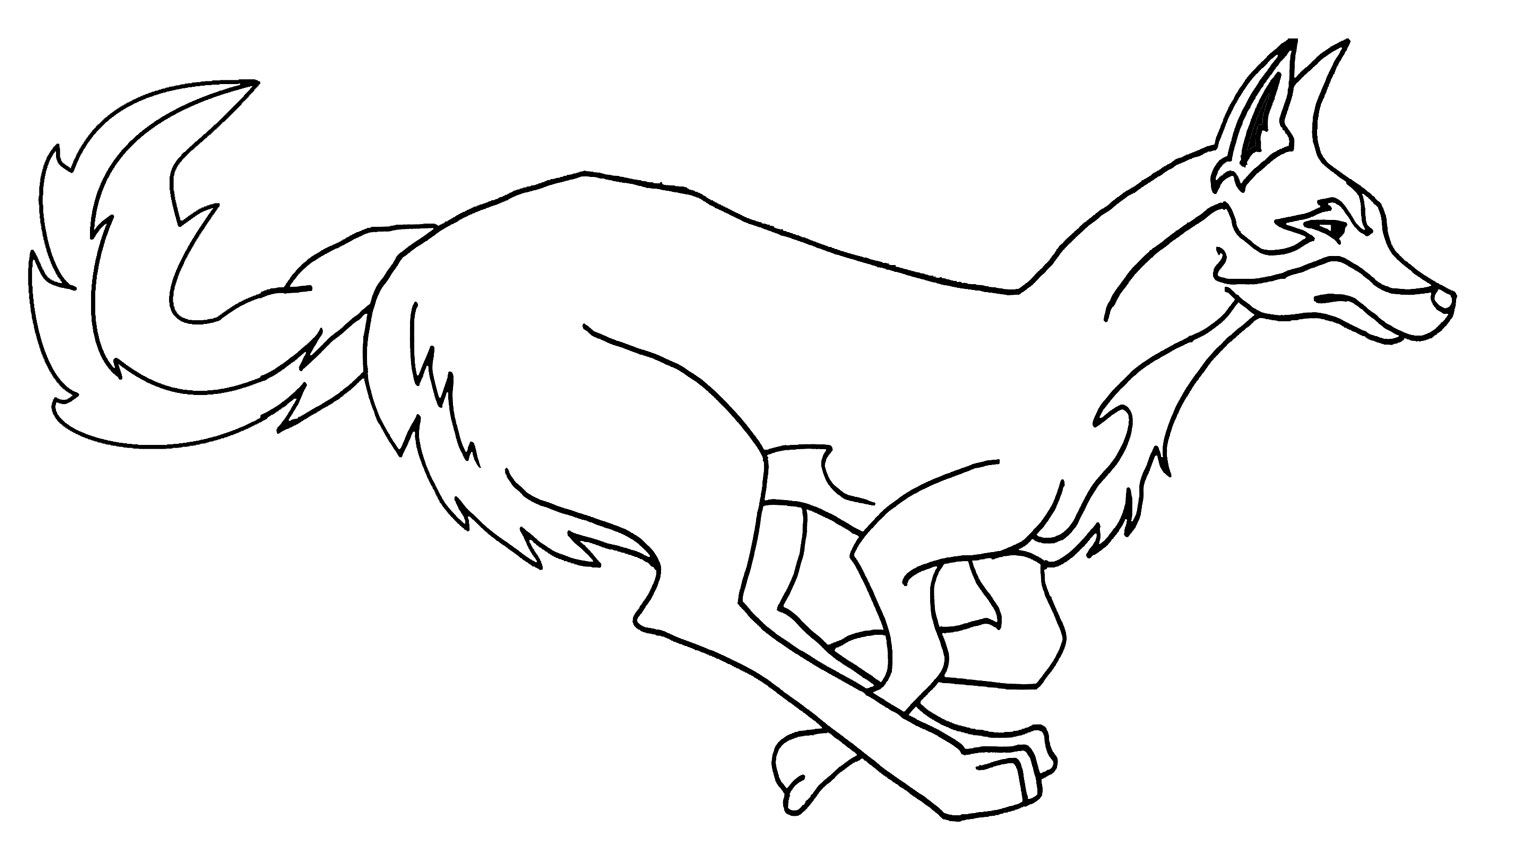 Dessin #12843 - Coloriage coyote à imprimer